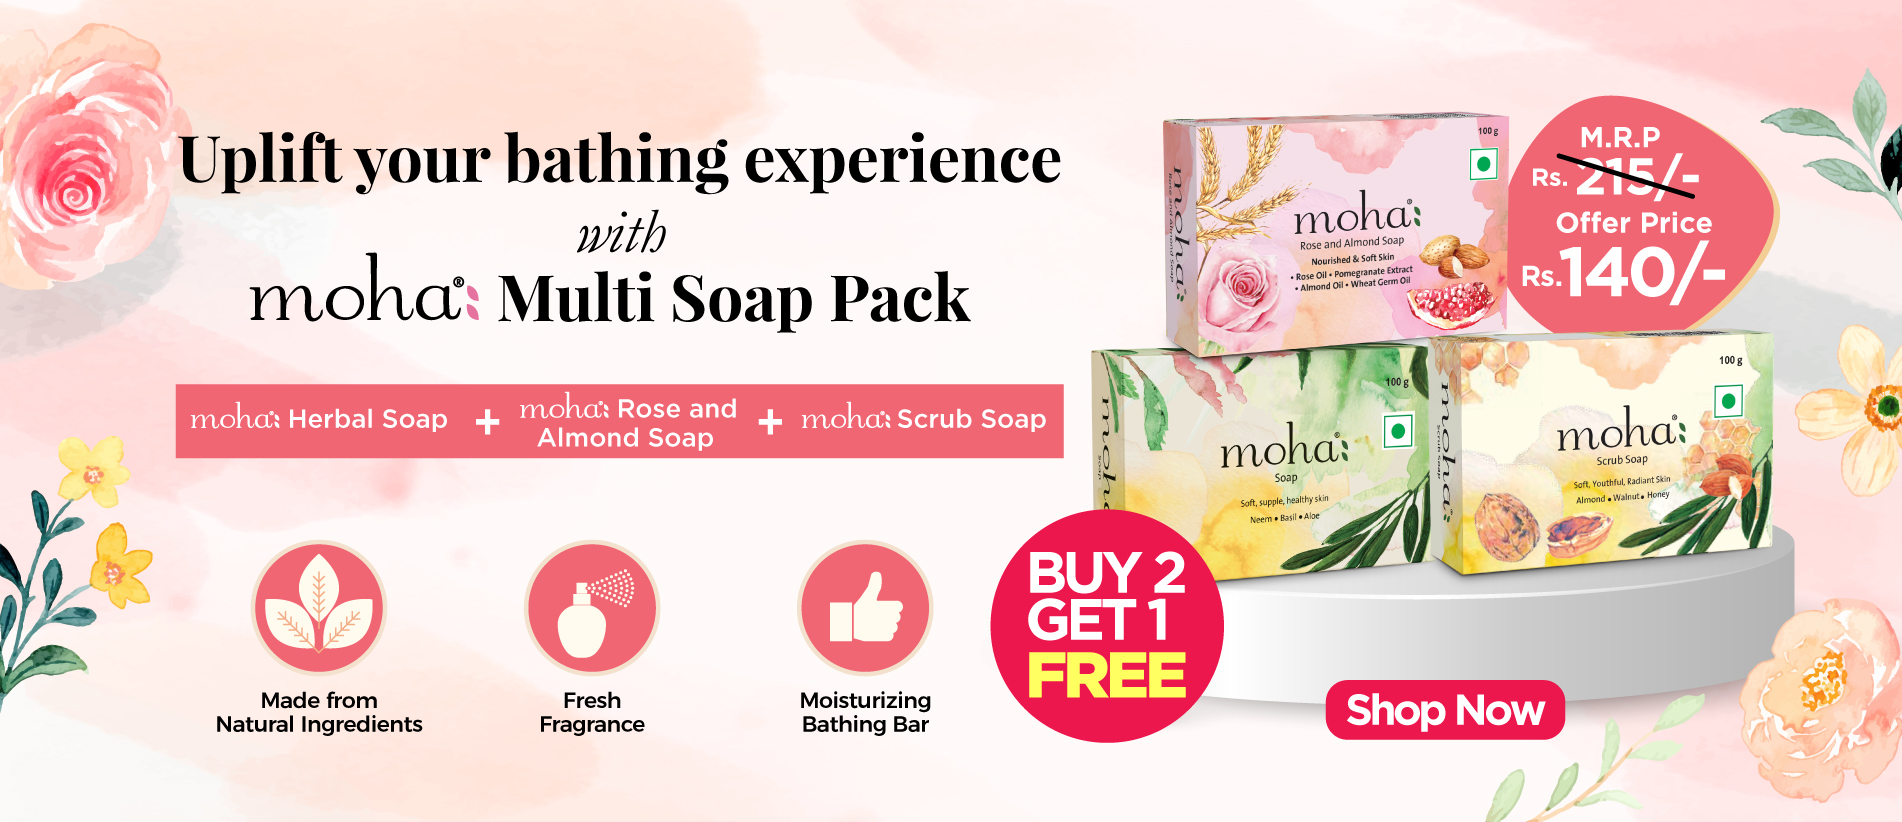 moha: Multi Soap Pack